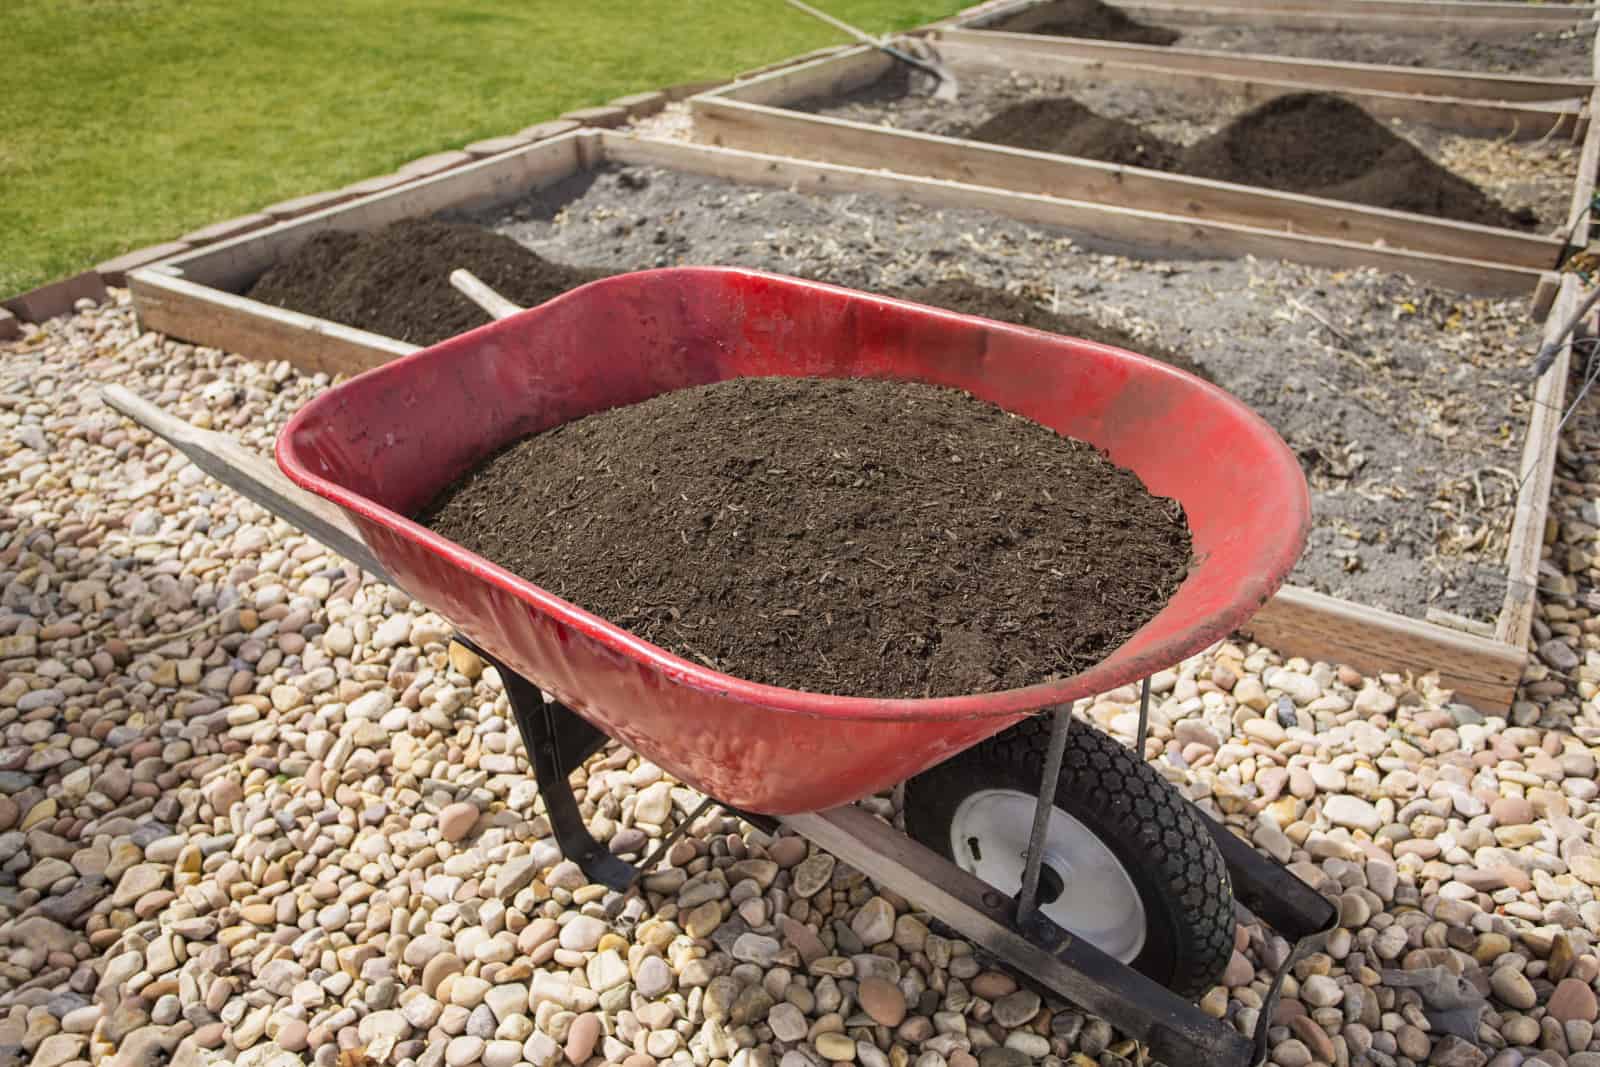 Wheelbarrow full of compost dirt sitting in a backyard garden ready to help grow healthy vegetables